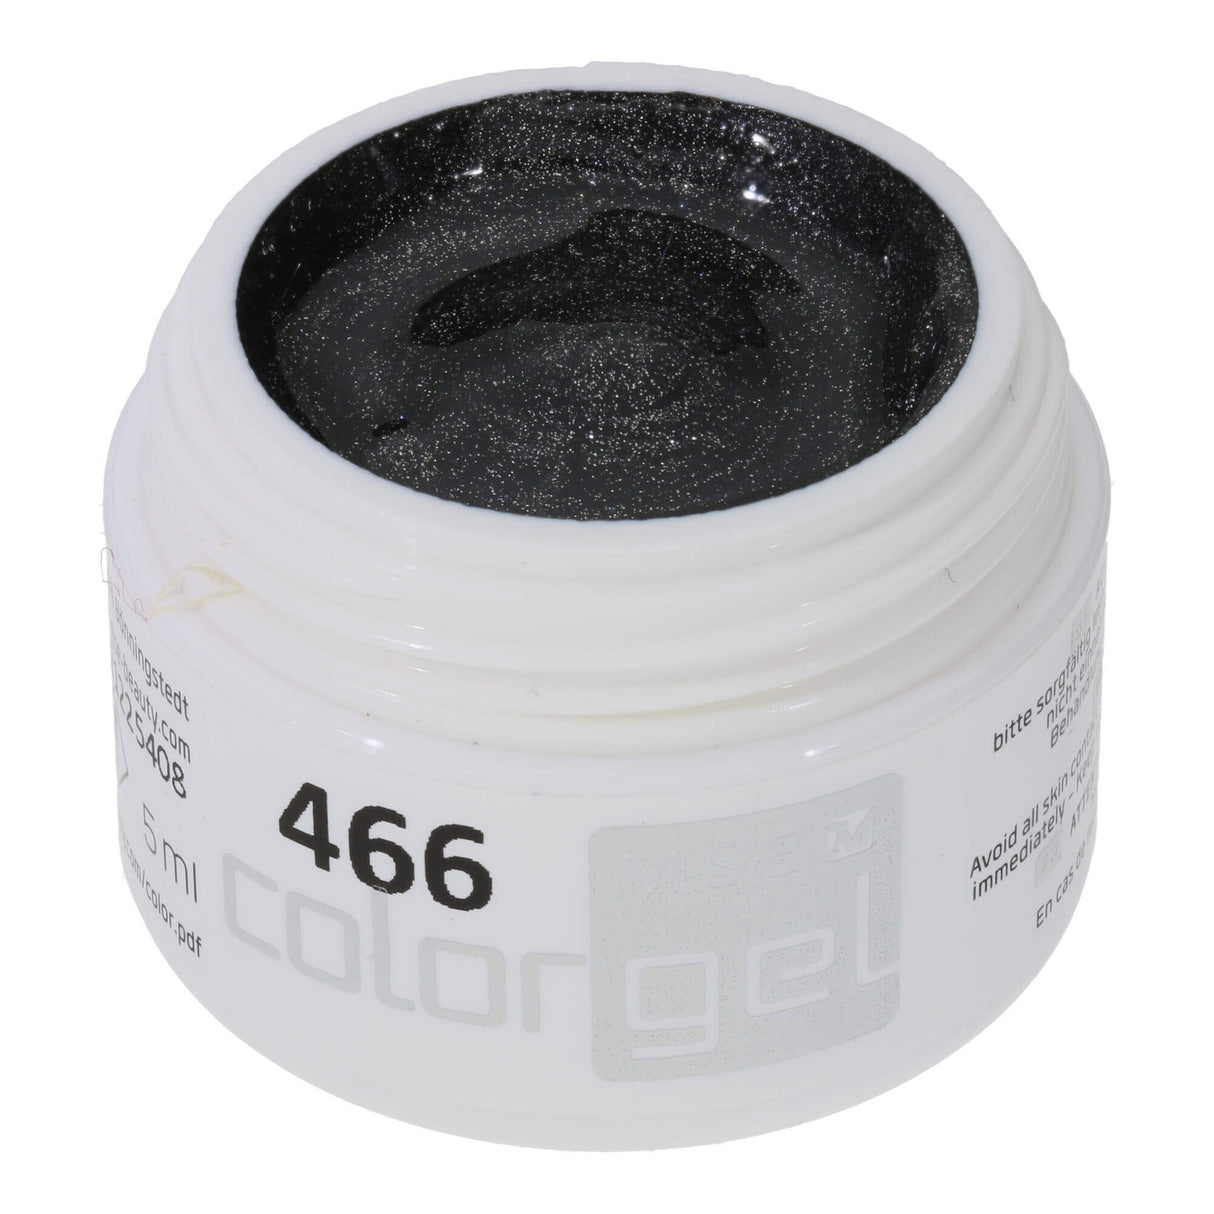 # 466 Premium EFFECT Color Gel 5ml Dark gray metallic gel